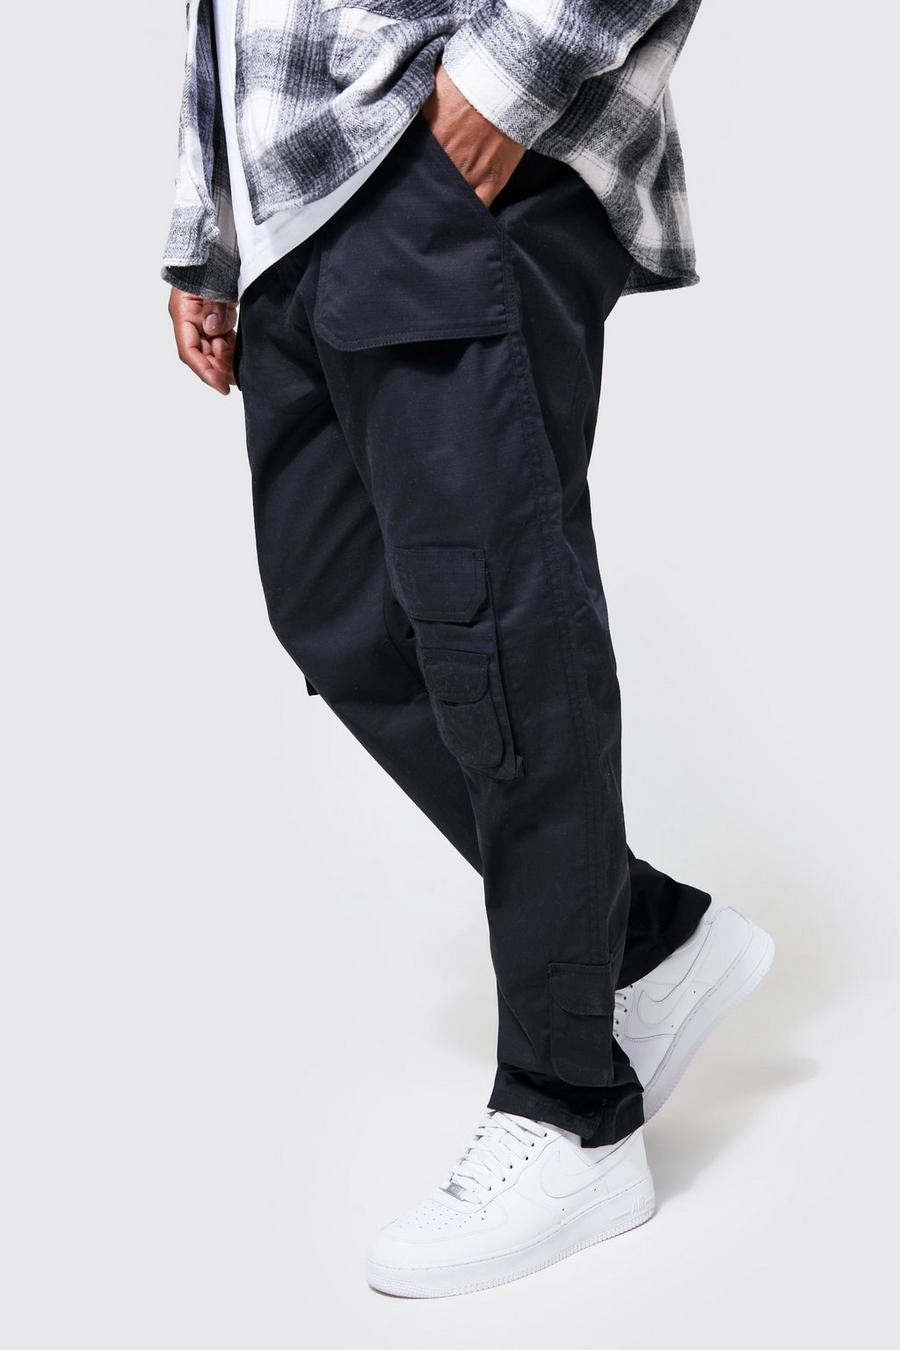 Black negro מכנסי דגמ'ח בגזרה צרה עם כיסים מרובים למידות גדולות